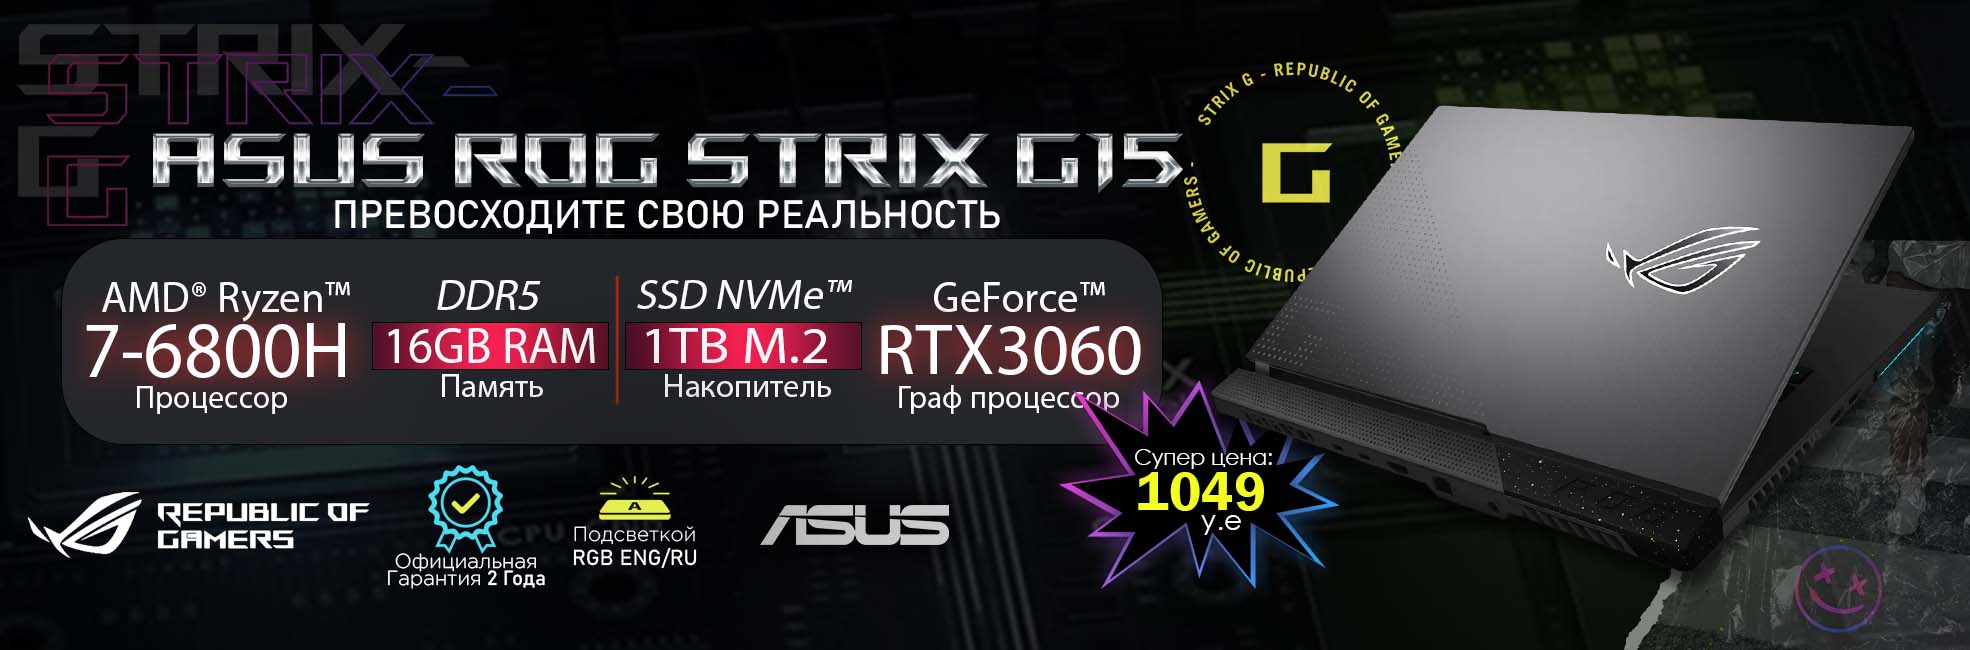 G513 new banner 3060 3 Asus Rog Strix - Kuchli Noutbuklar Asus RoG Strix